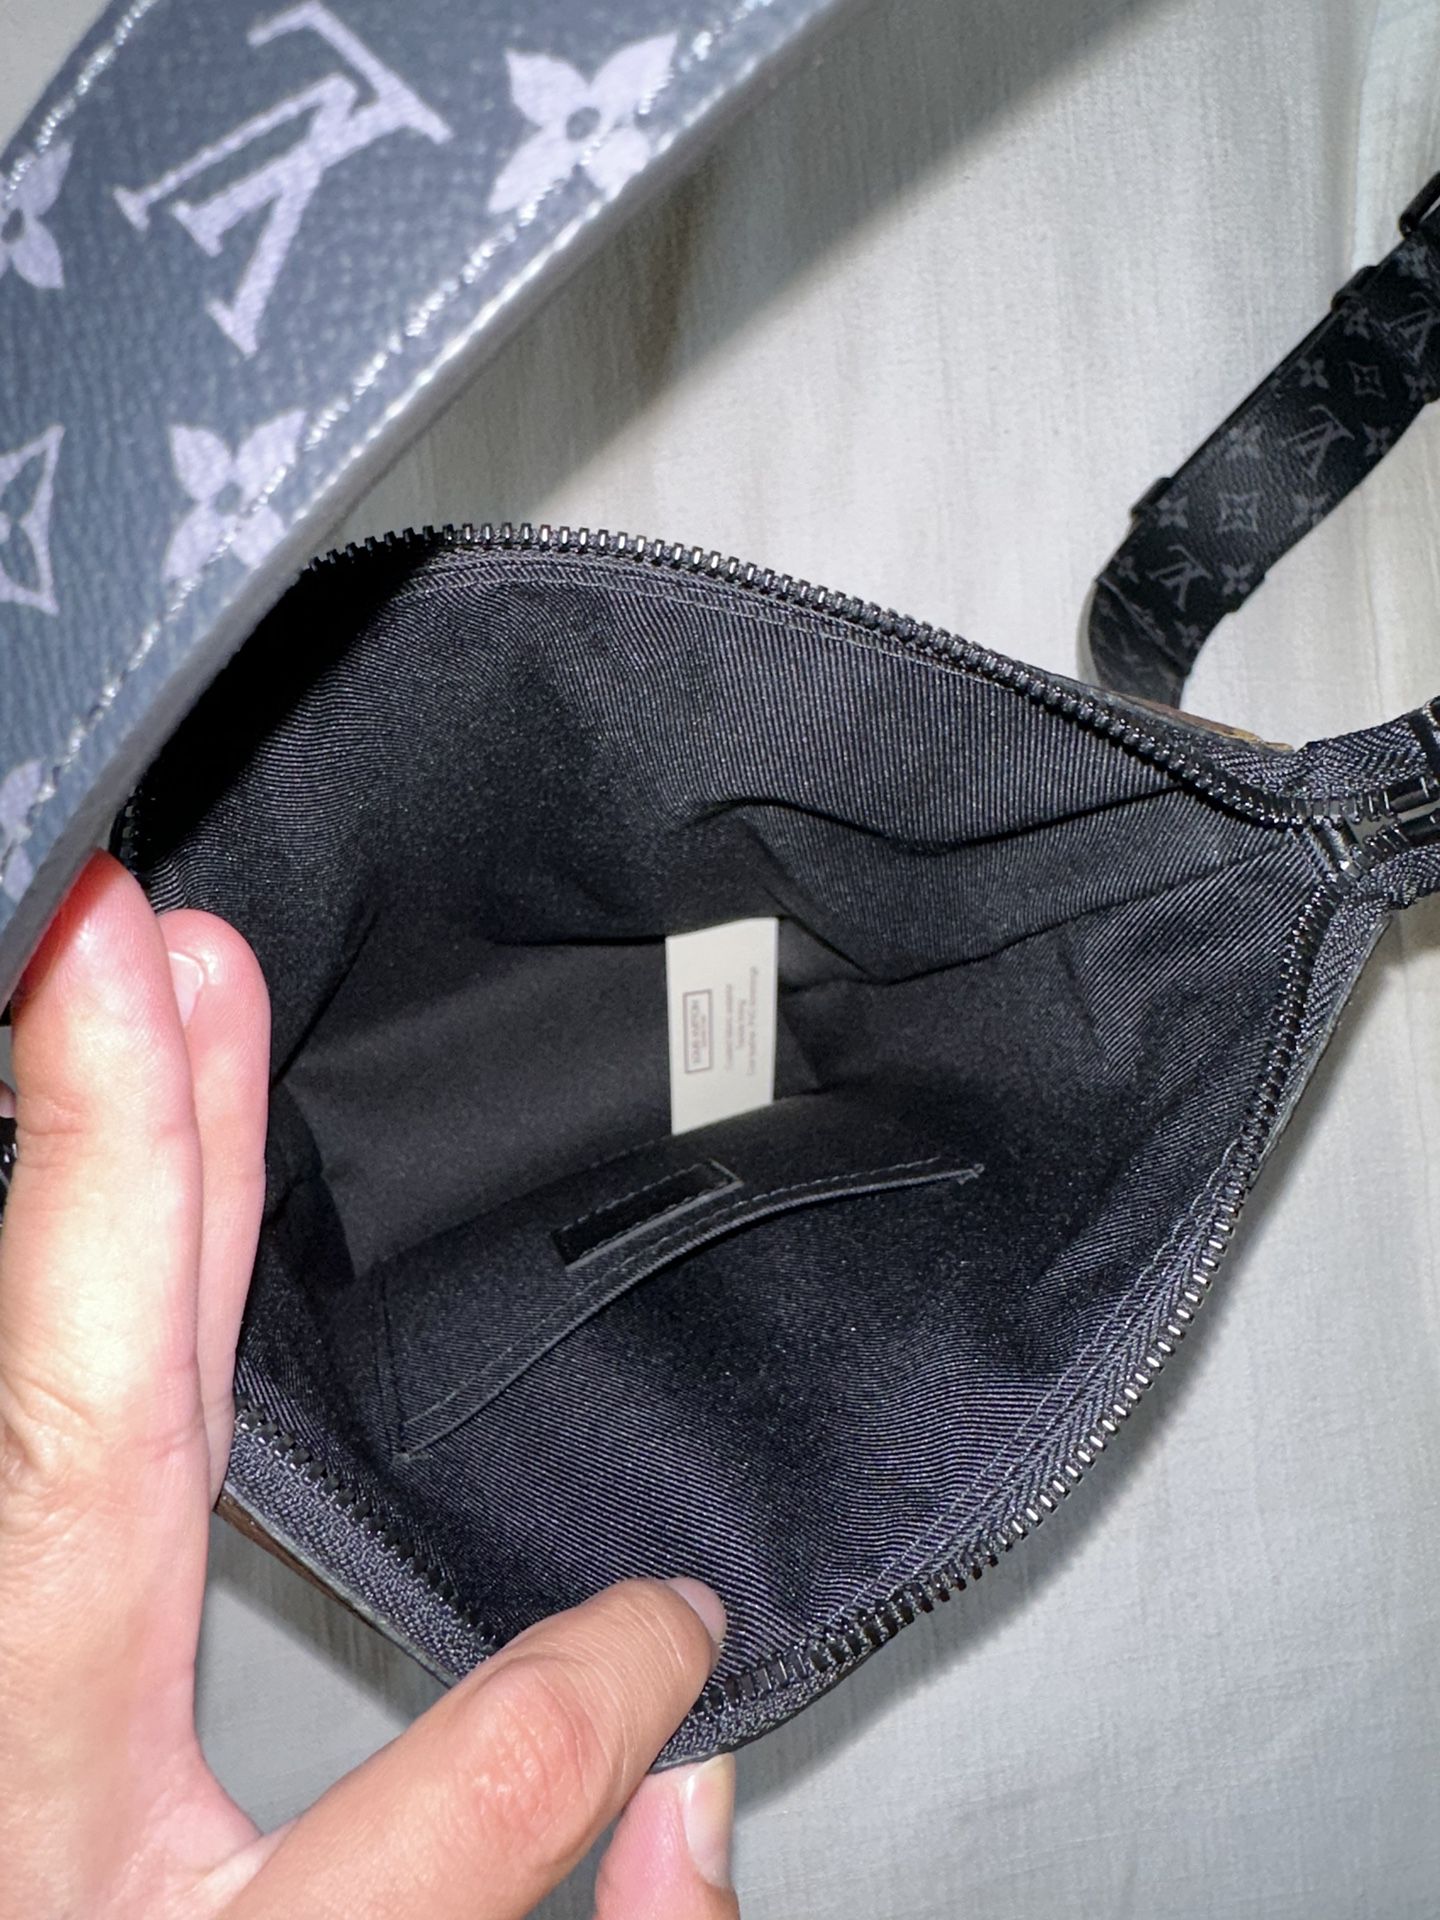 Louis Vuitton M45911 SAUMUR MESSENGER Bag for Sale in Beltsville, MD -  OfferUp